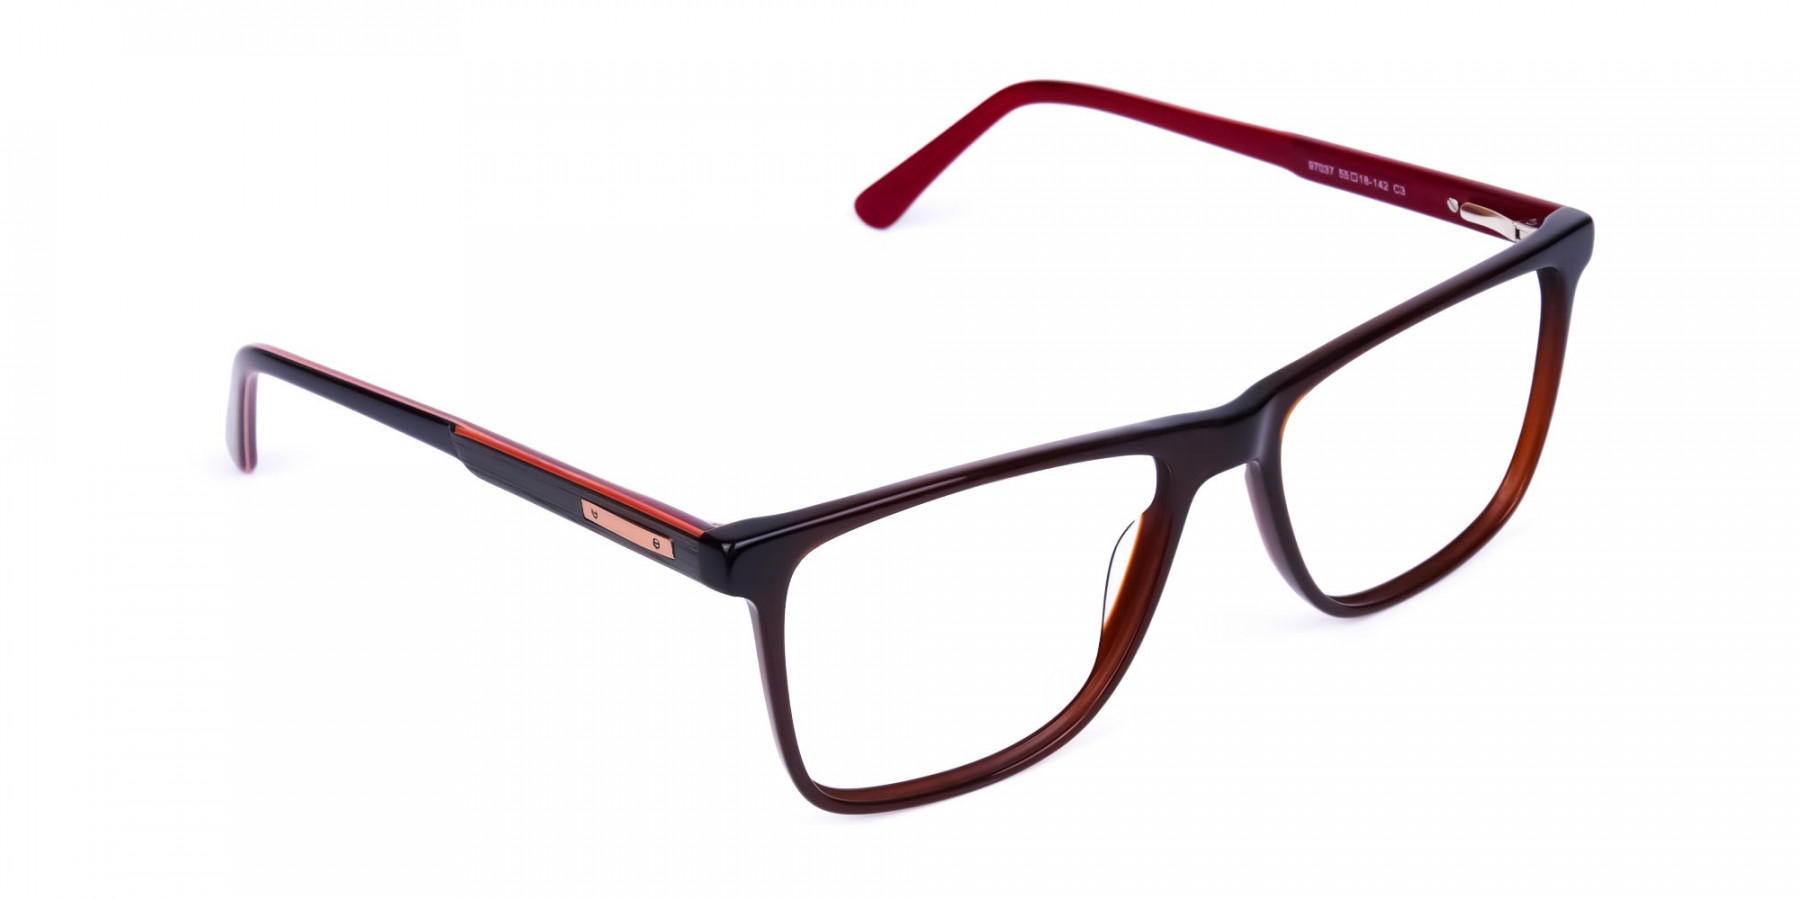 BLACKLEY 3 - Stylish Brown Rectangular Glasses Frames | Specscart.®